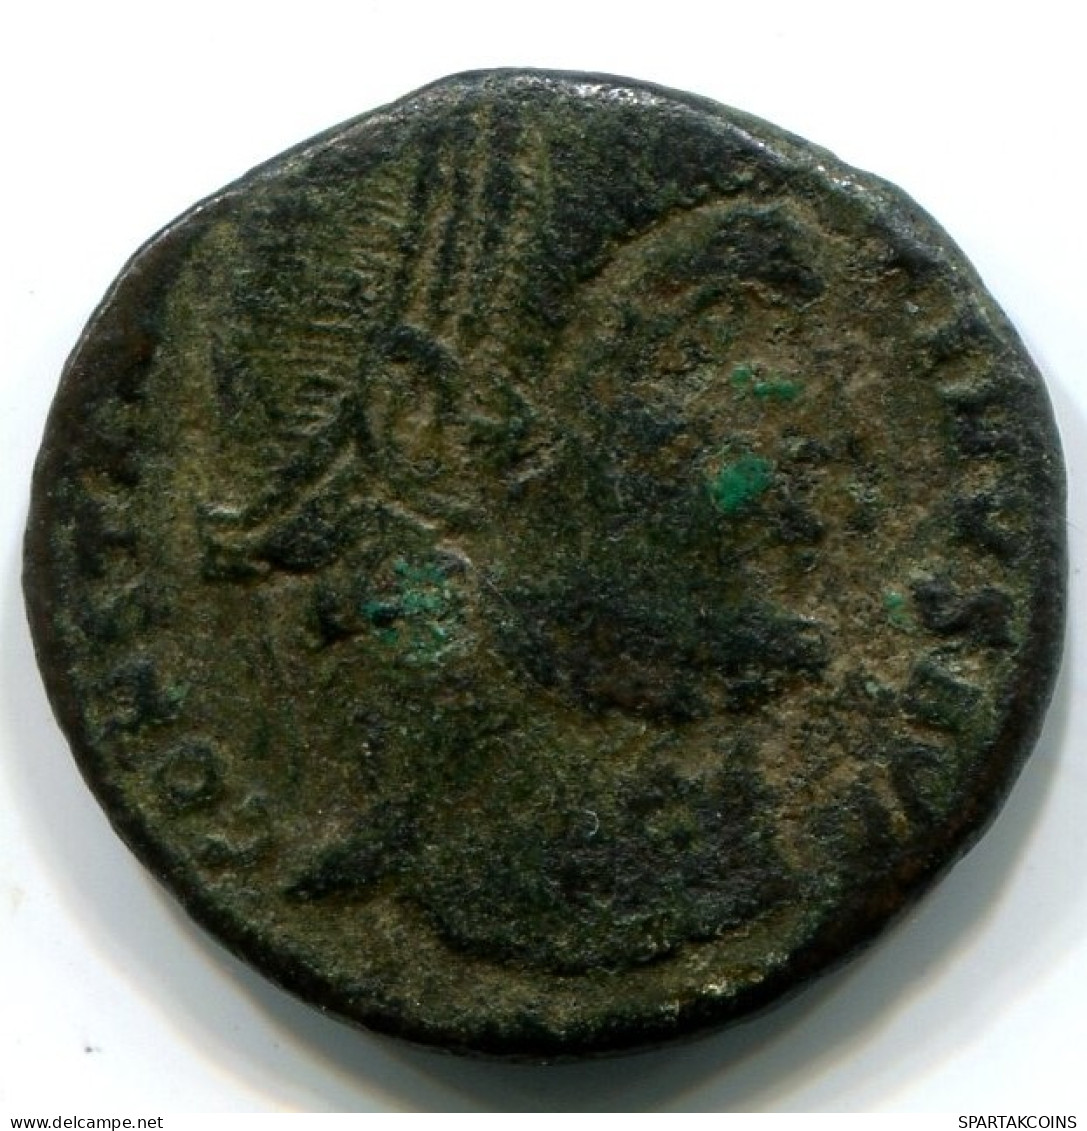 CONSTANTINE I Antioch Mint SMANT AD 326 PROVIDENTIA AVGG Campgate #ANC12452.15.U.A - El Impero Christiano (307 / 363)